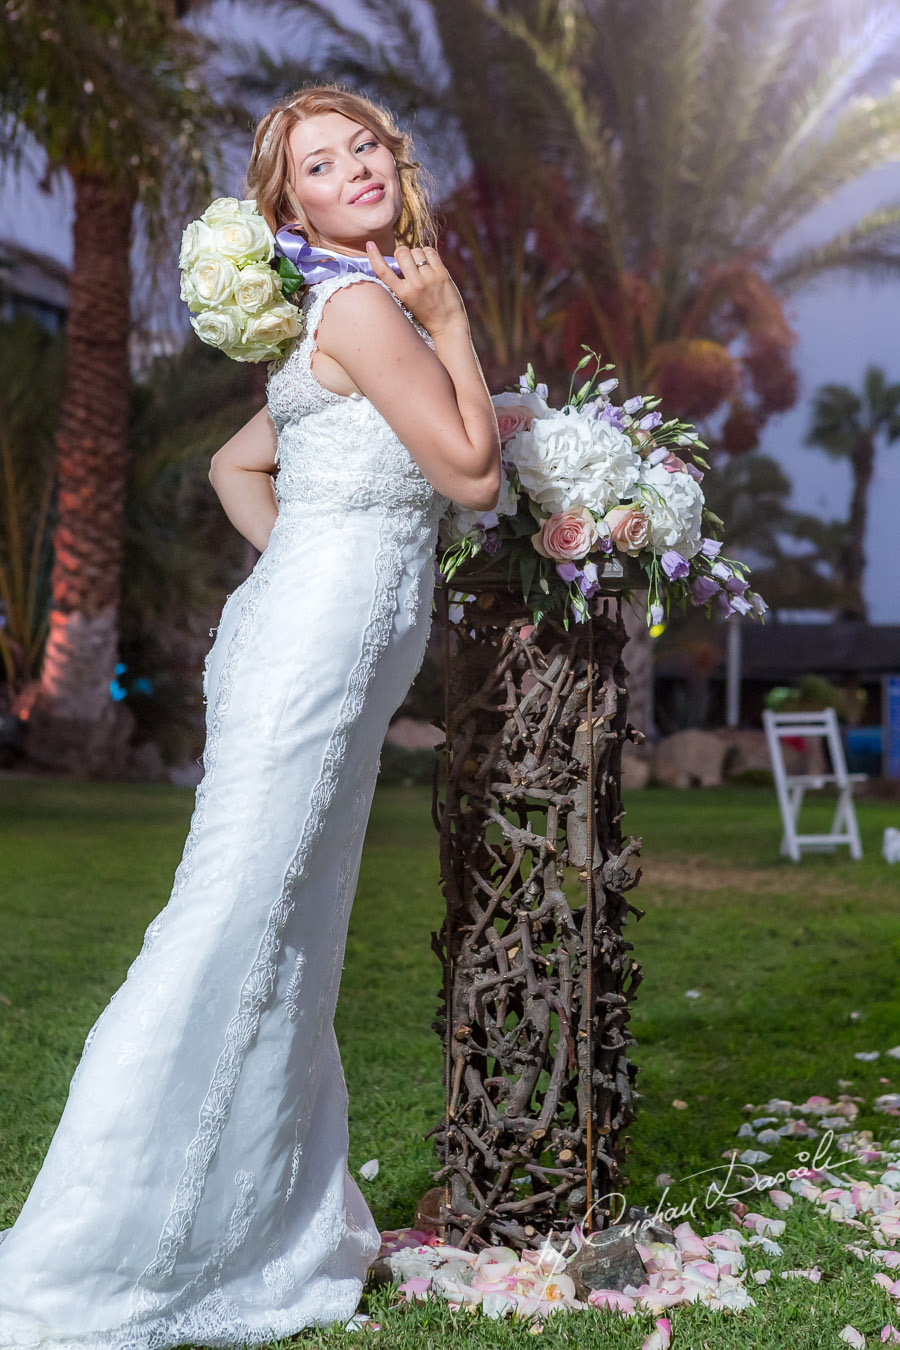 Amathus Limassol Wedding. Cyprus Photographer: Cristian Dascalu